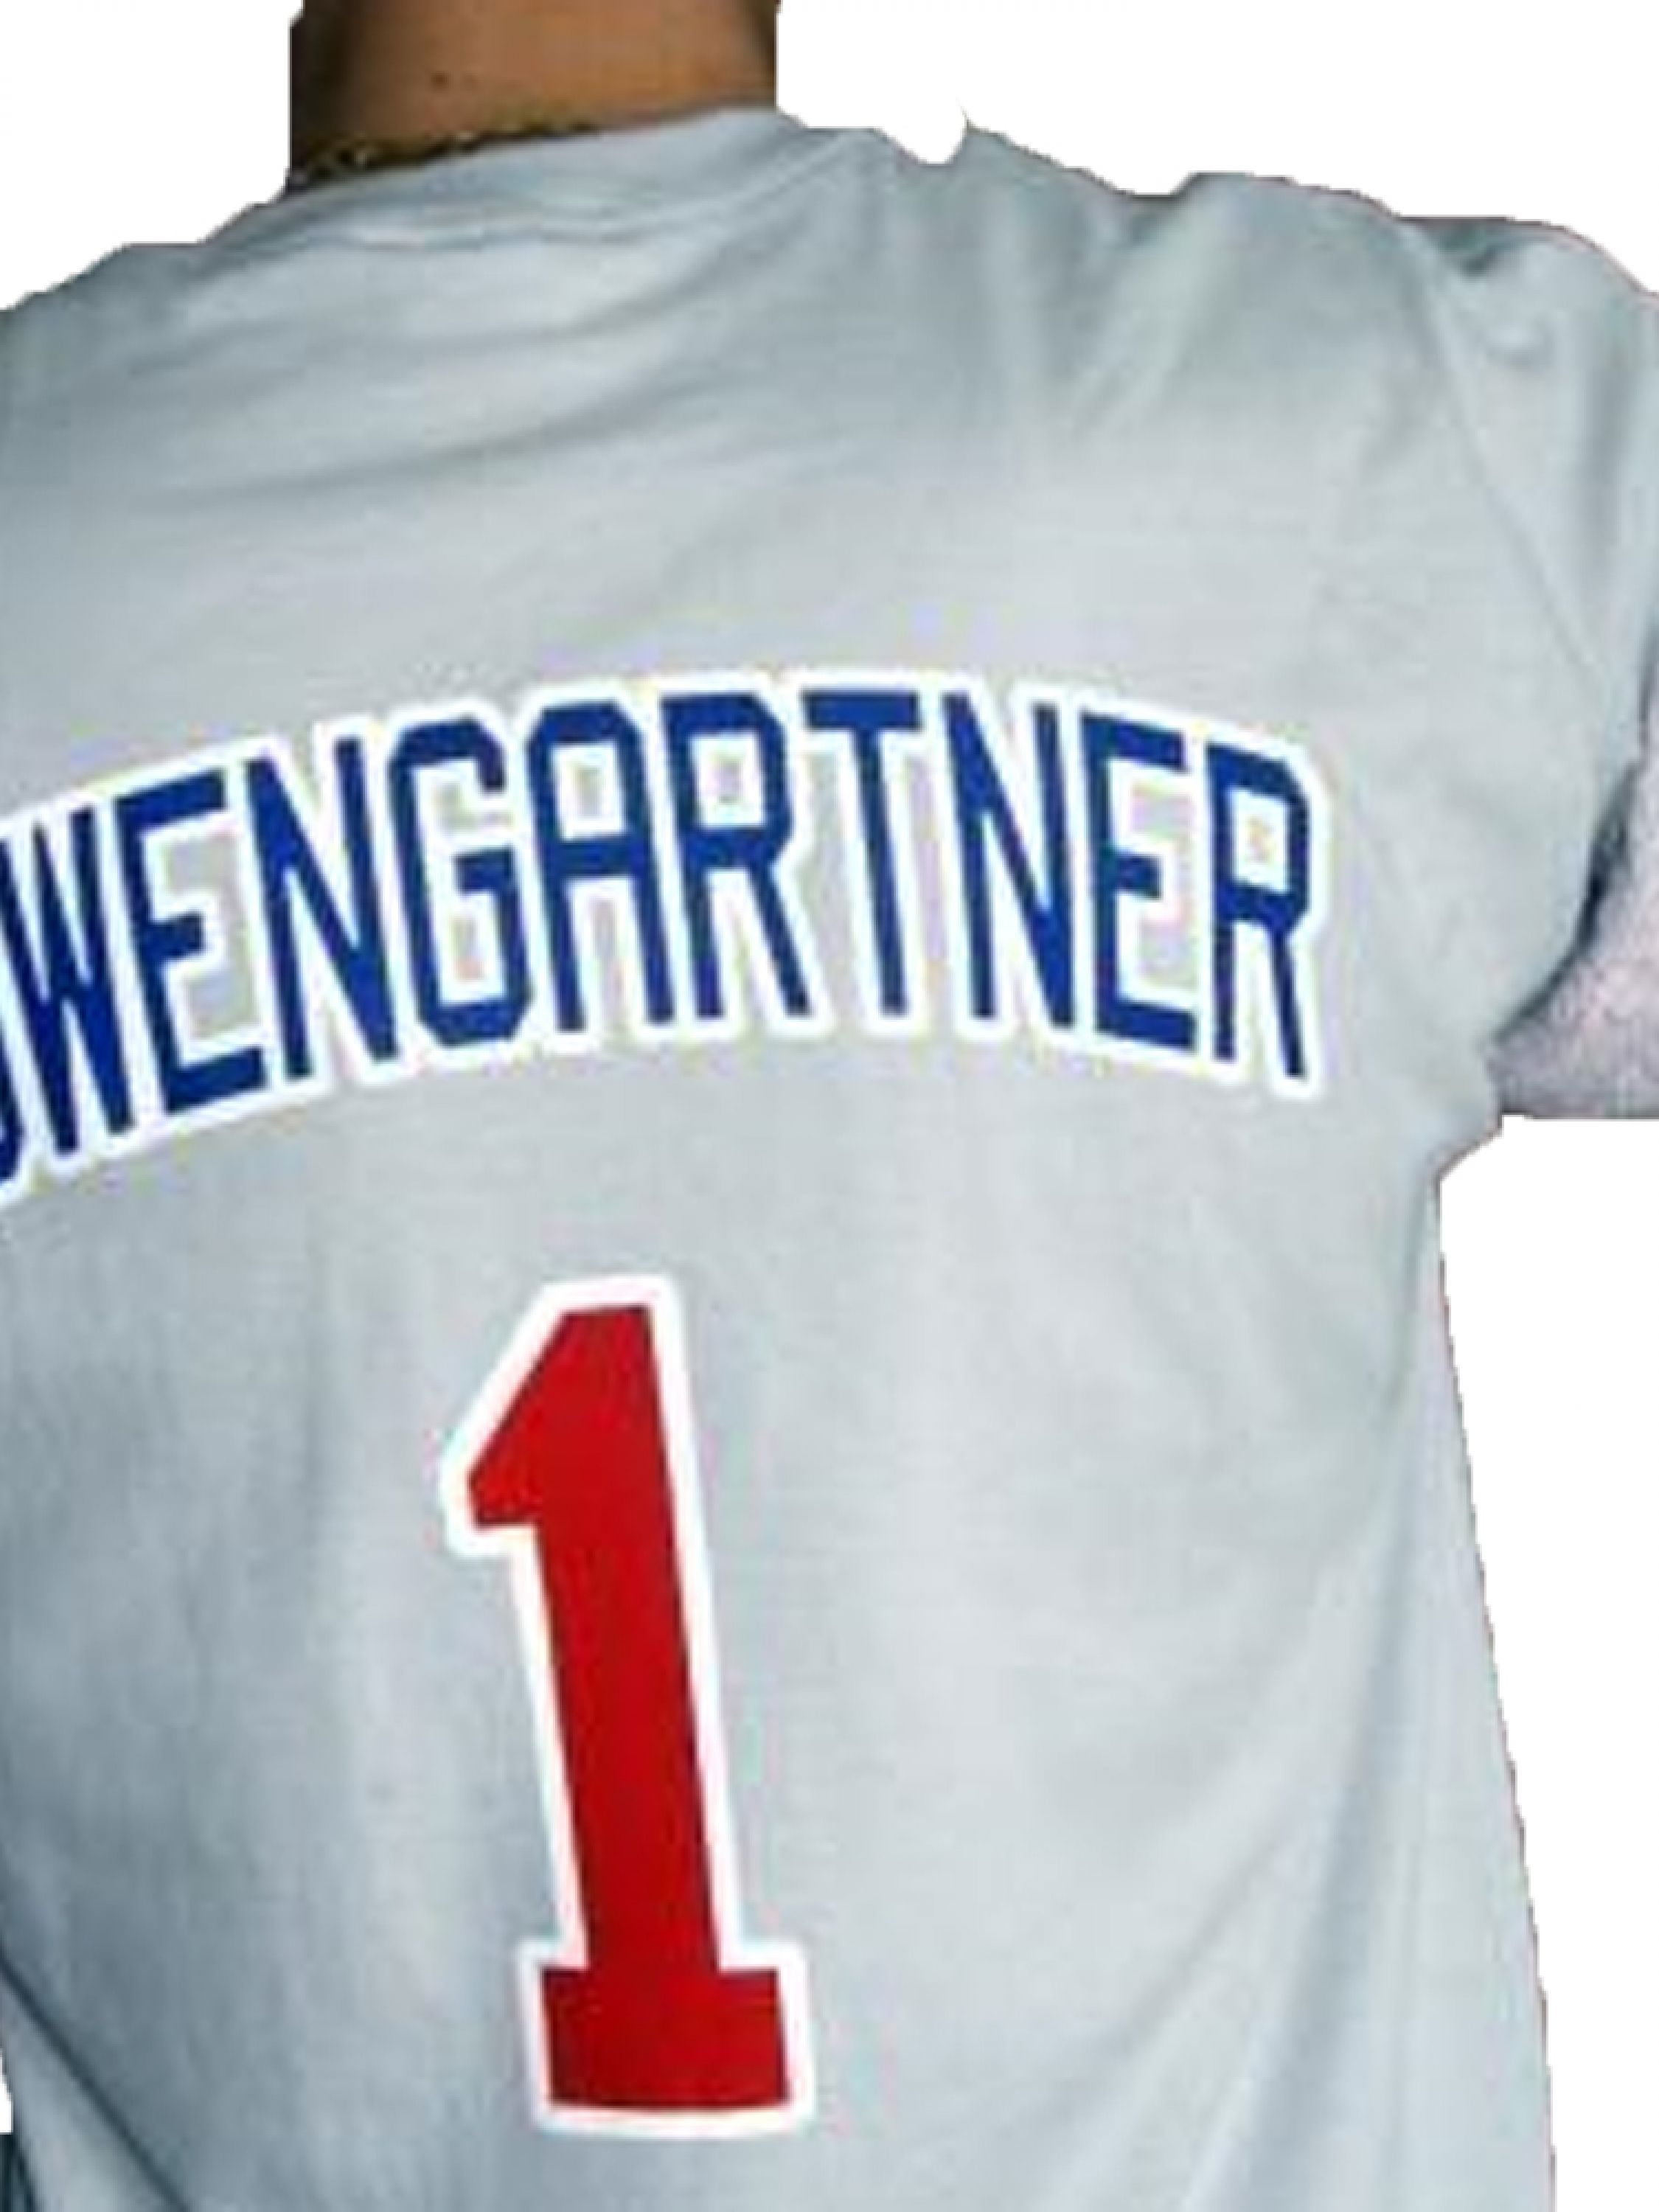 rowengartner jersey